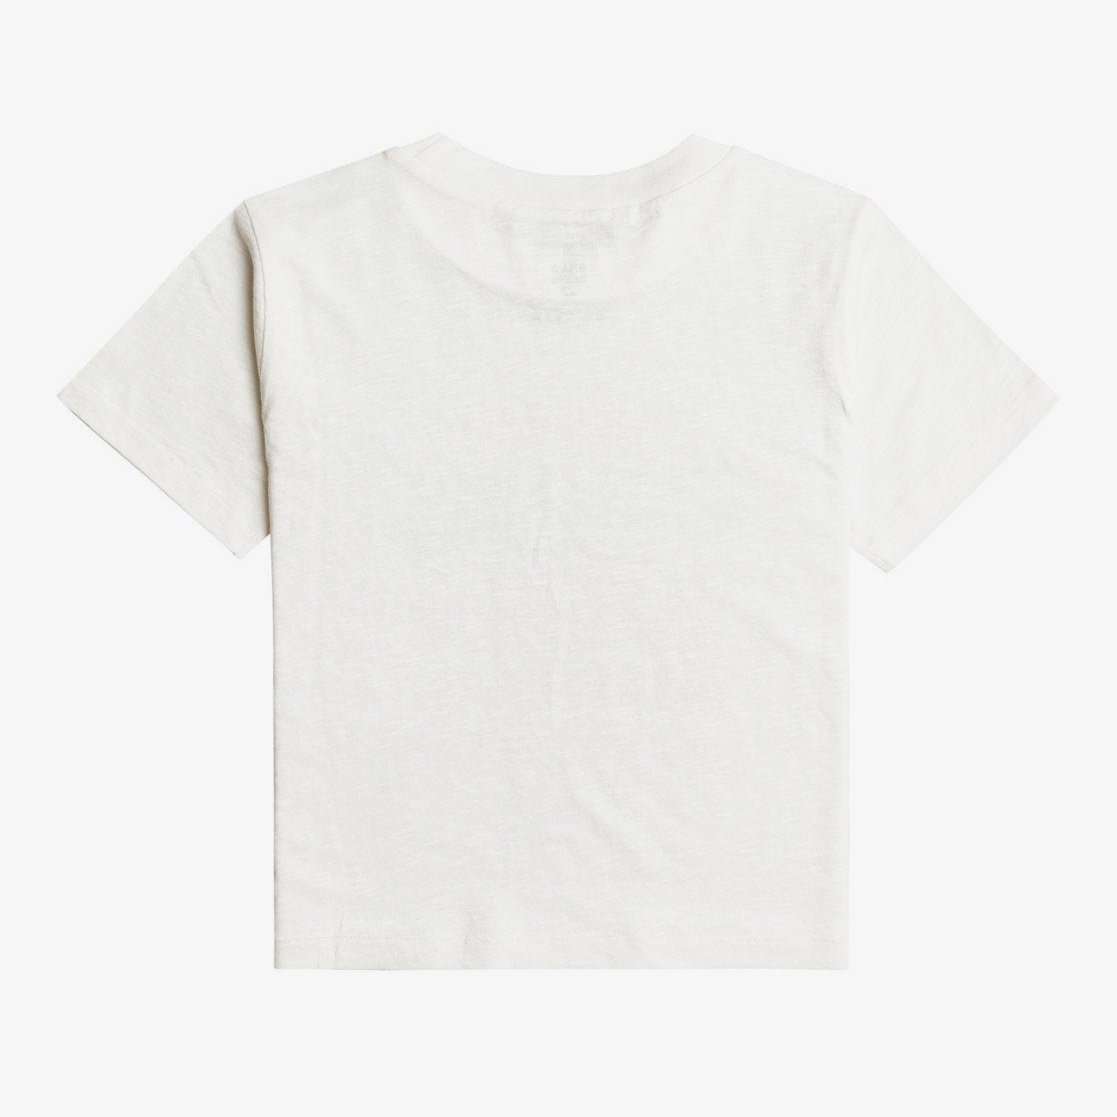 Will Shine - Short Sleeve T-Shirt for Women